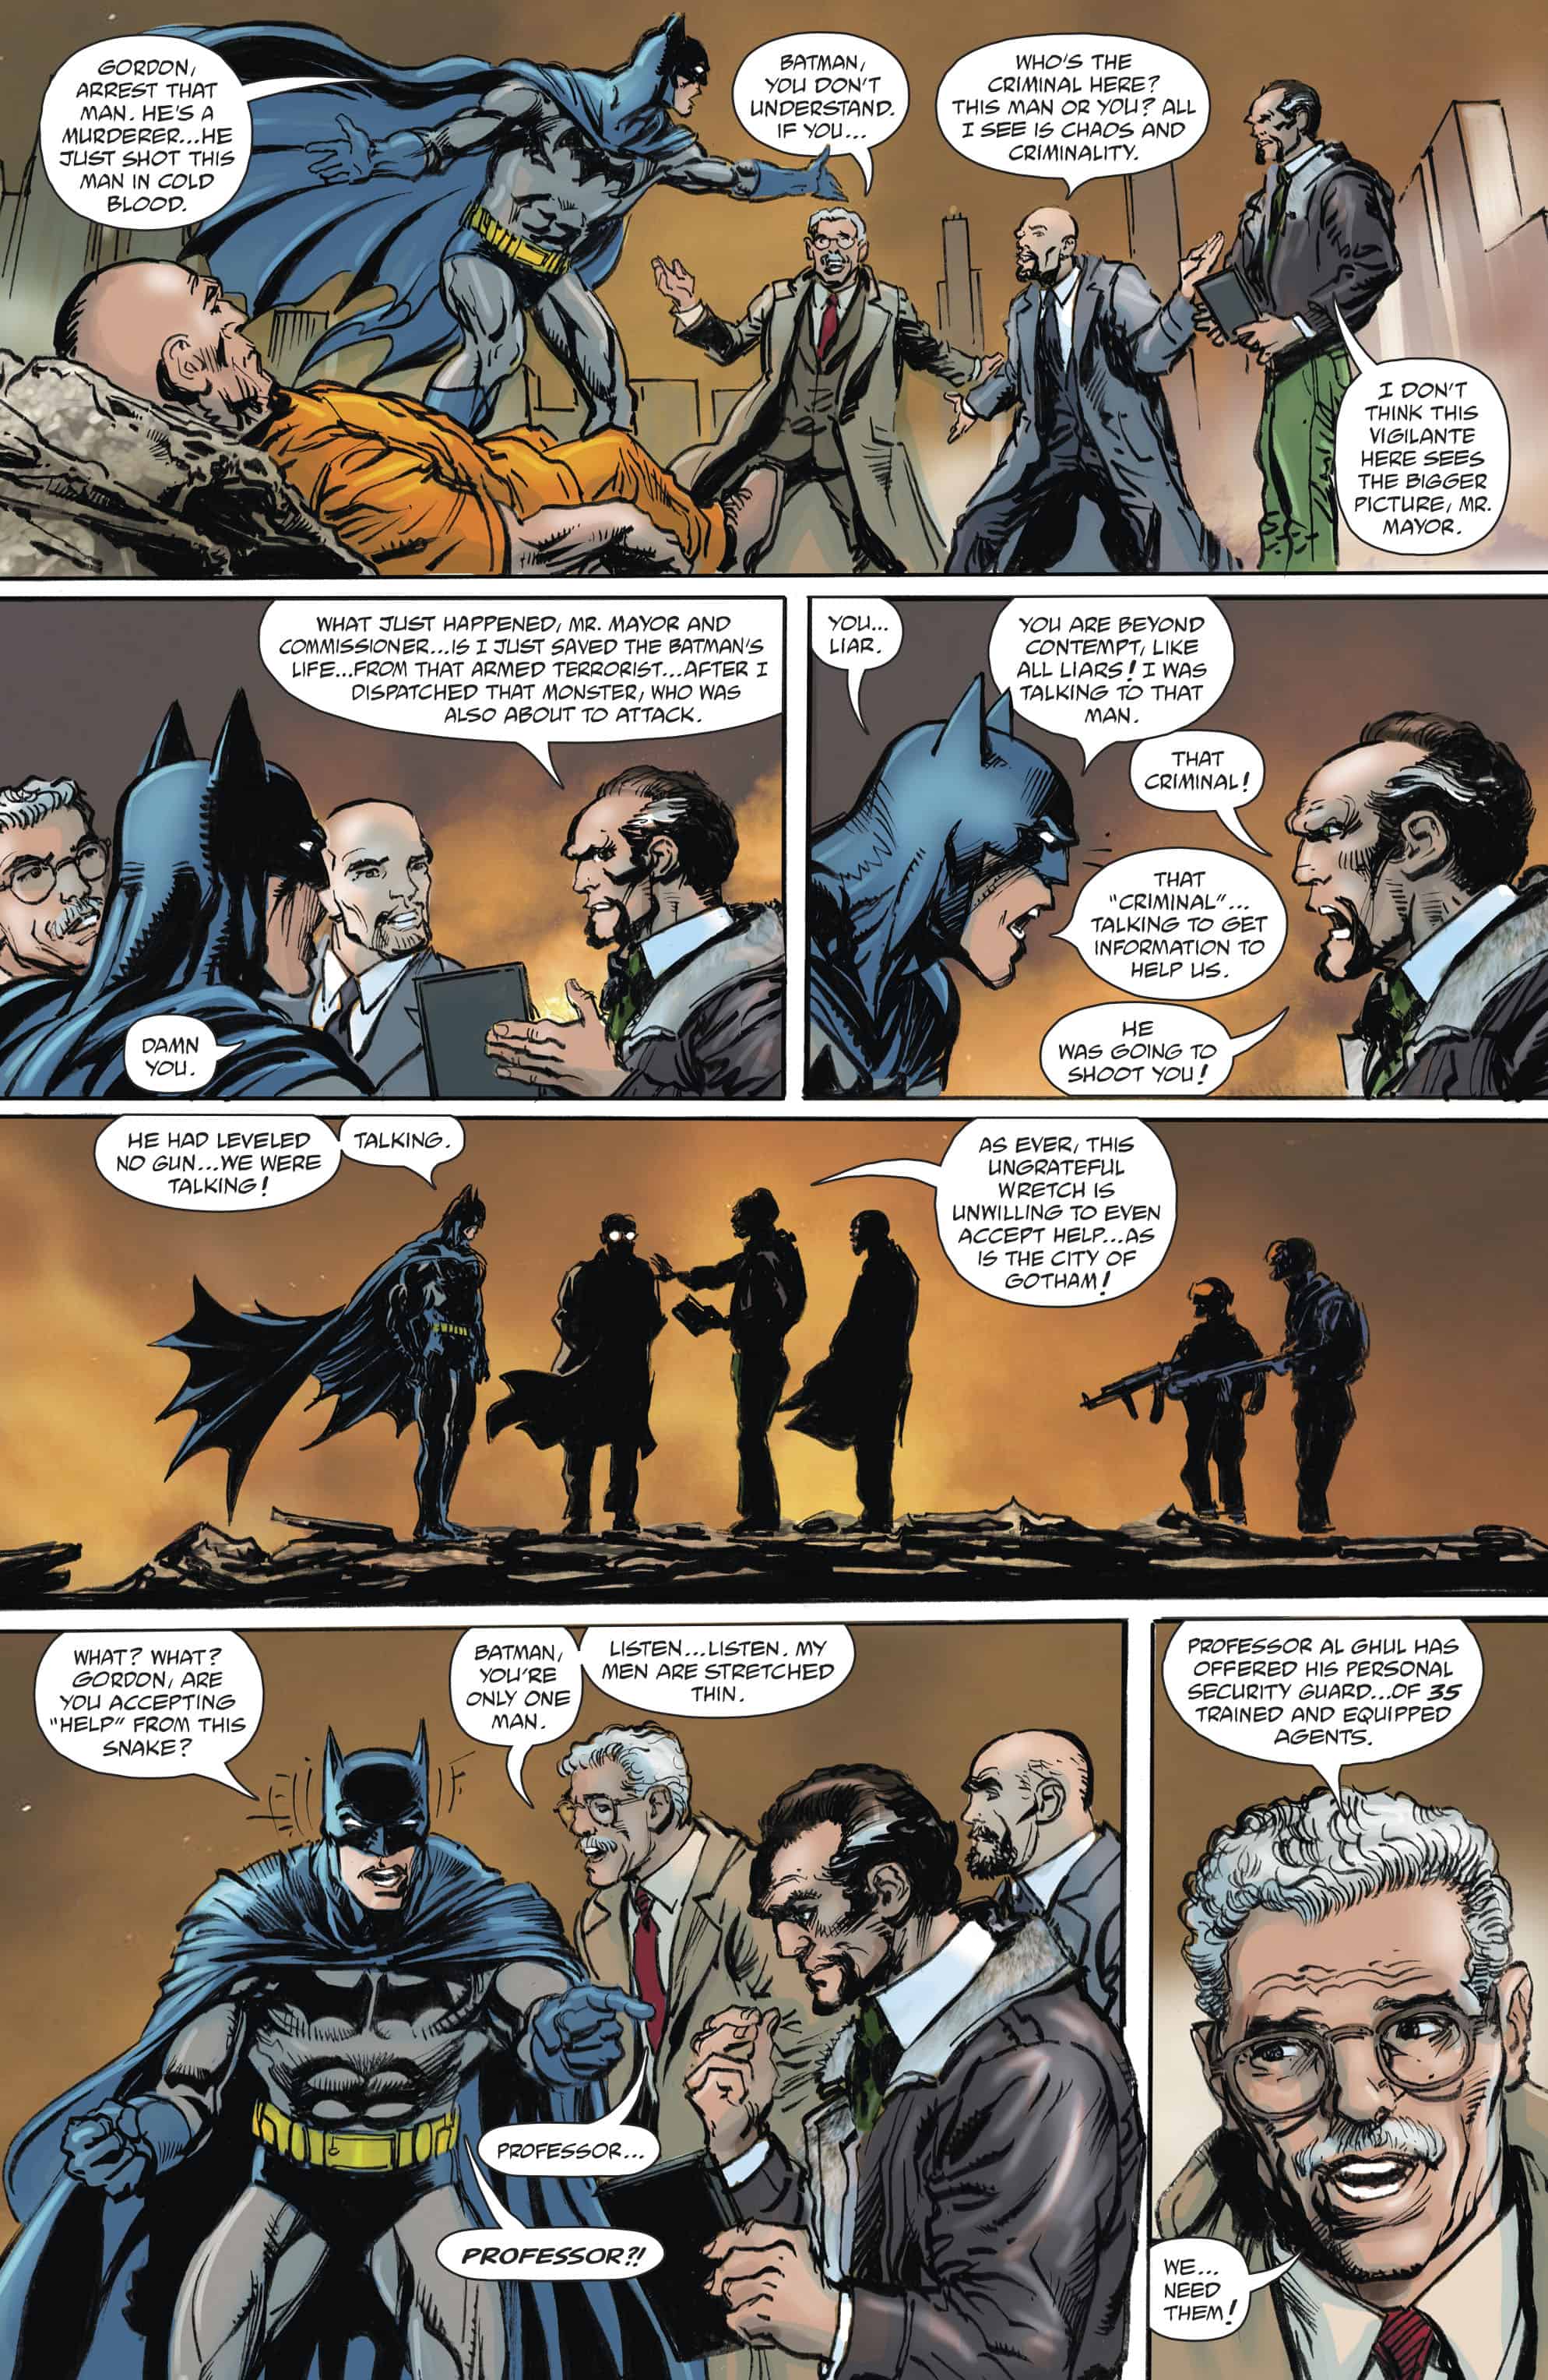 Batman vs Ra's Al Ghul #1 - Comic Watch